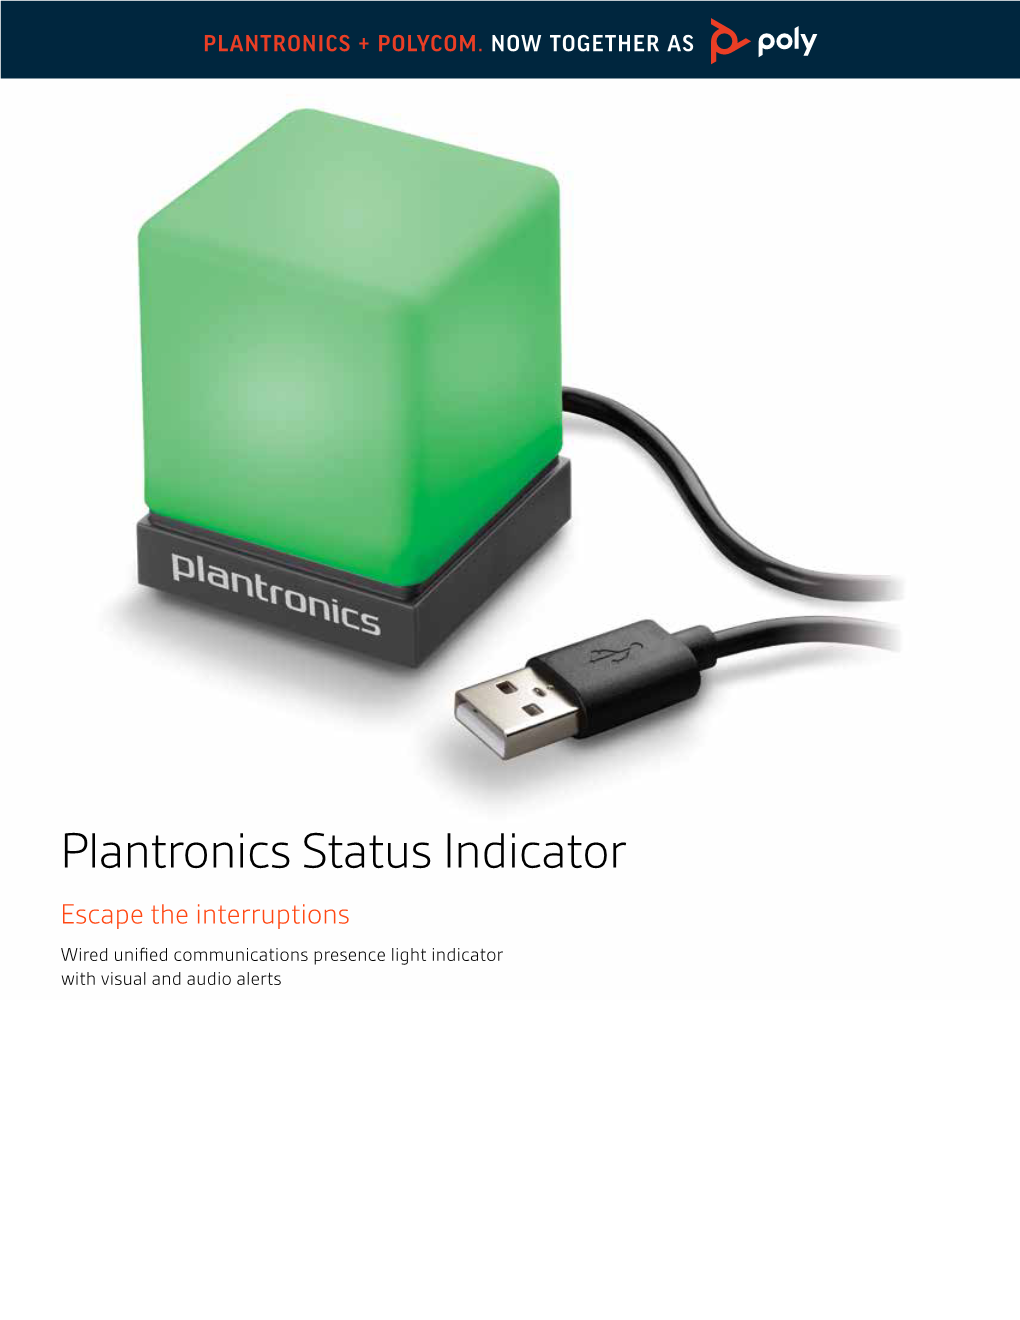 Plantronics Status Indicator